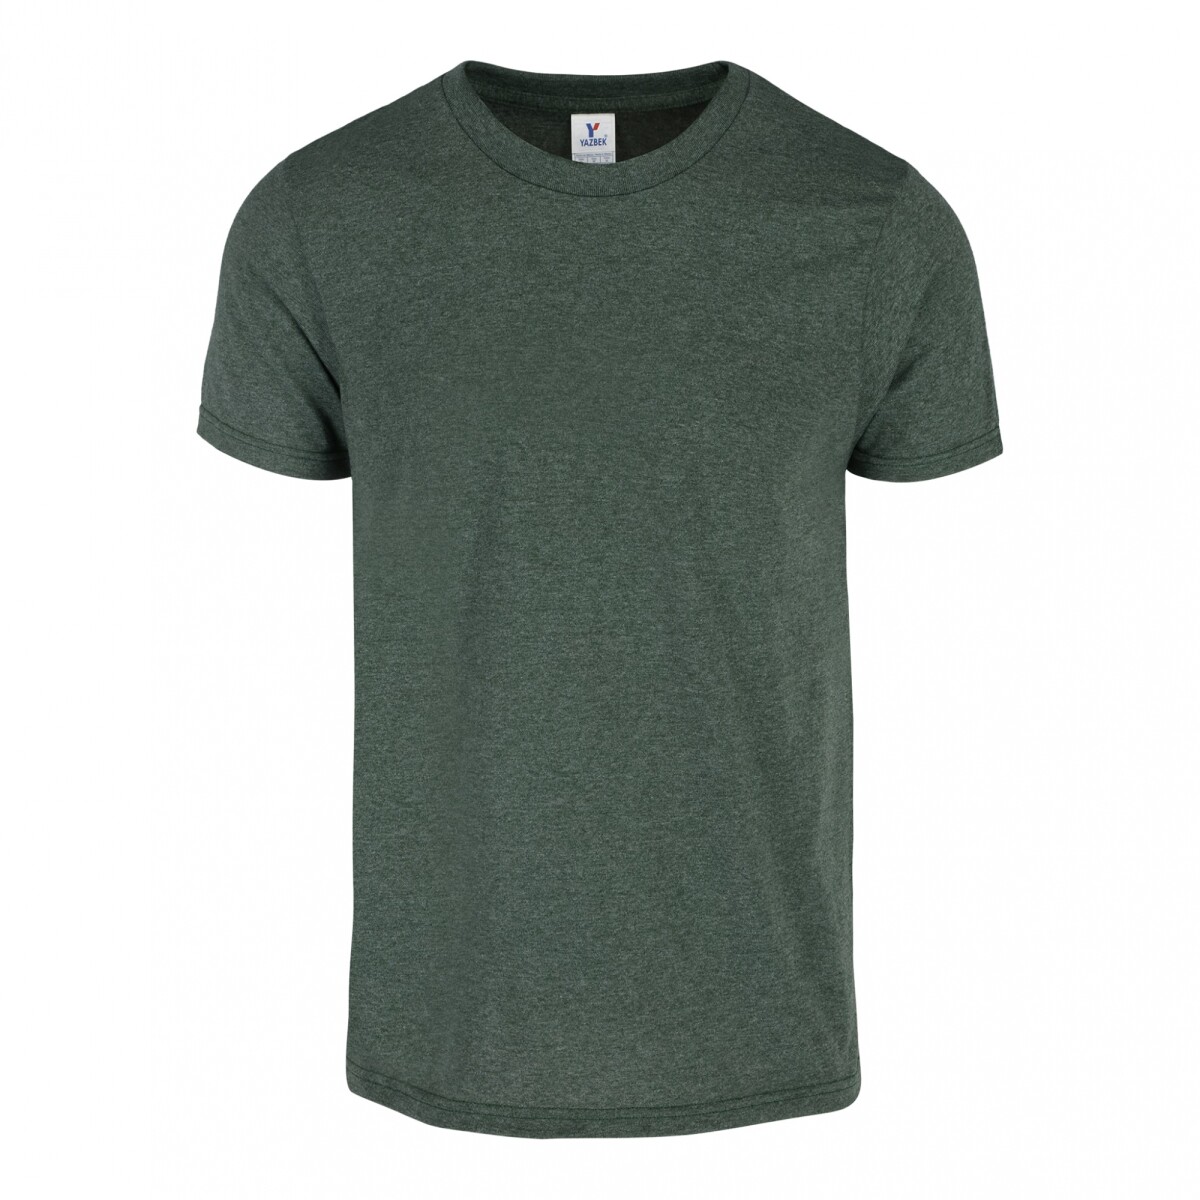 Camiseta a la base jaspe - Verde bosque jaspe 